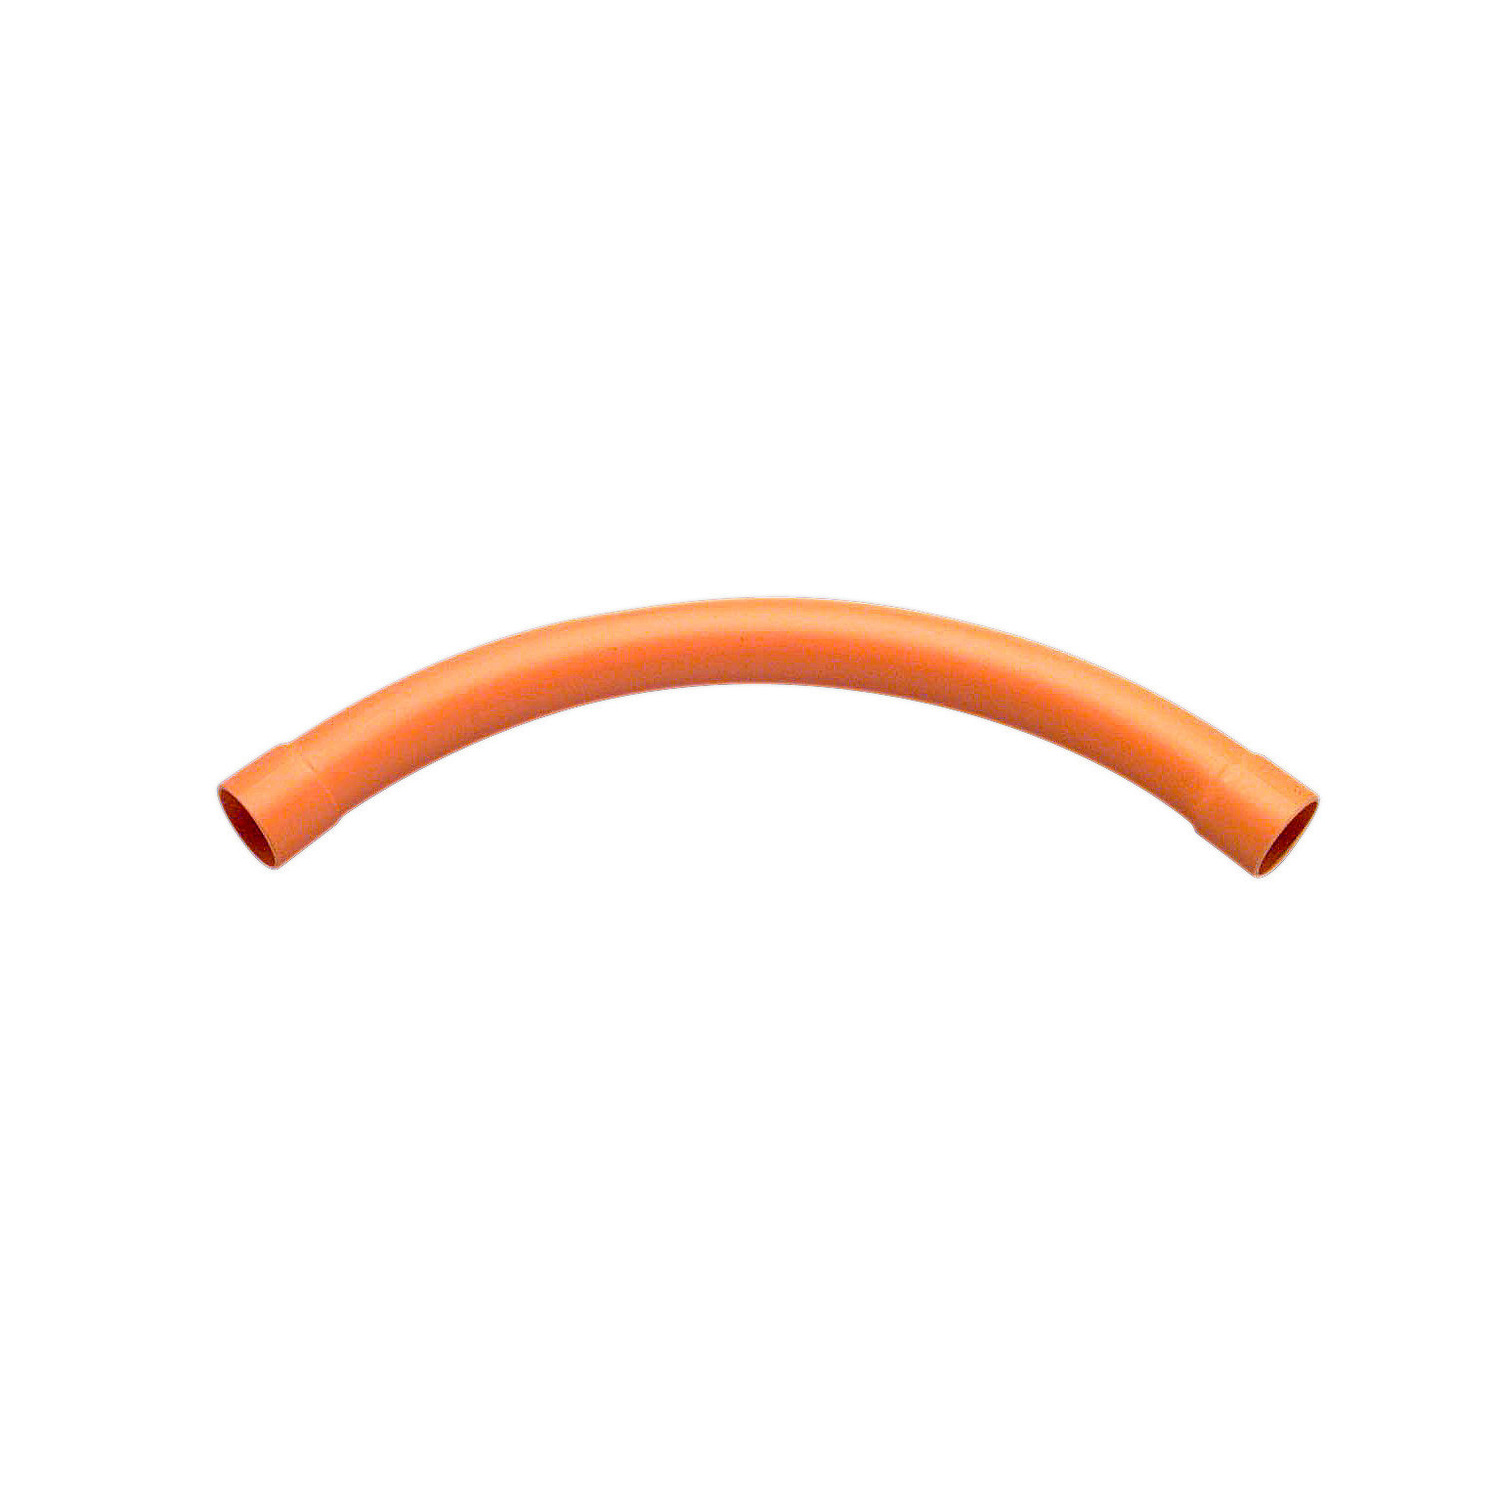 Solid Fittings - PVC, 90 Degree Heavy Duty Sweep Bends, 40mm, Orange